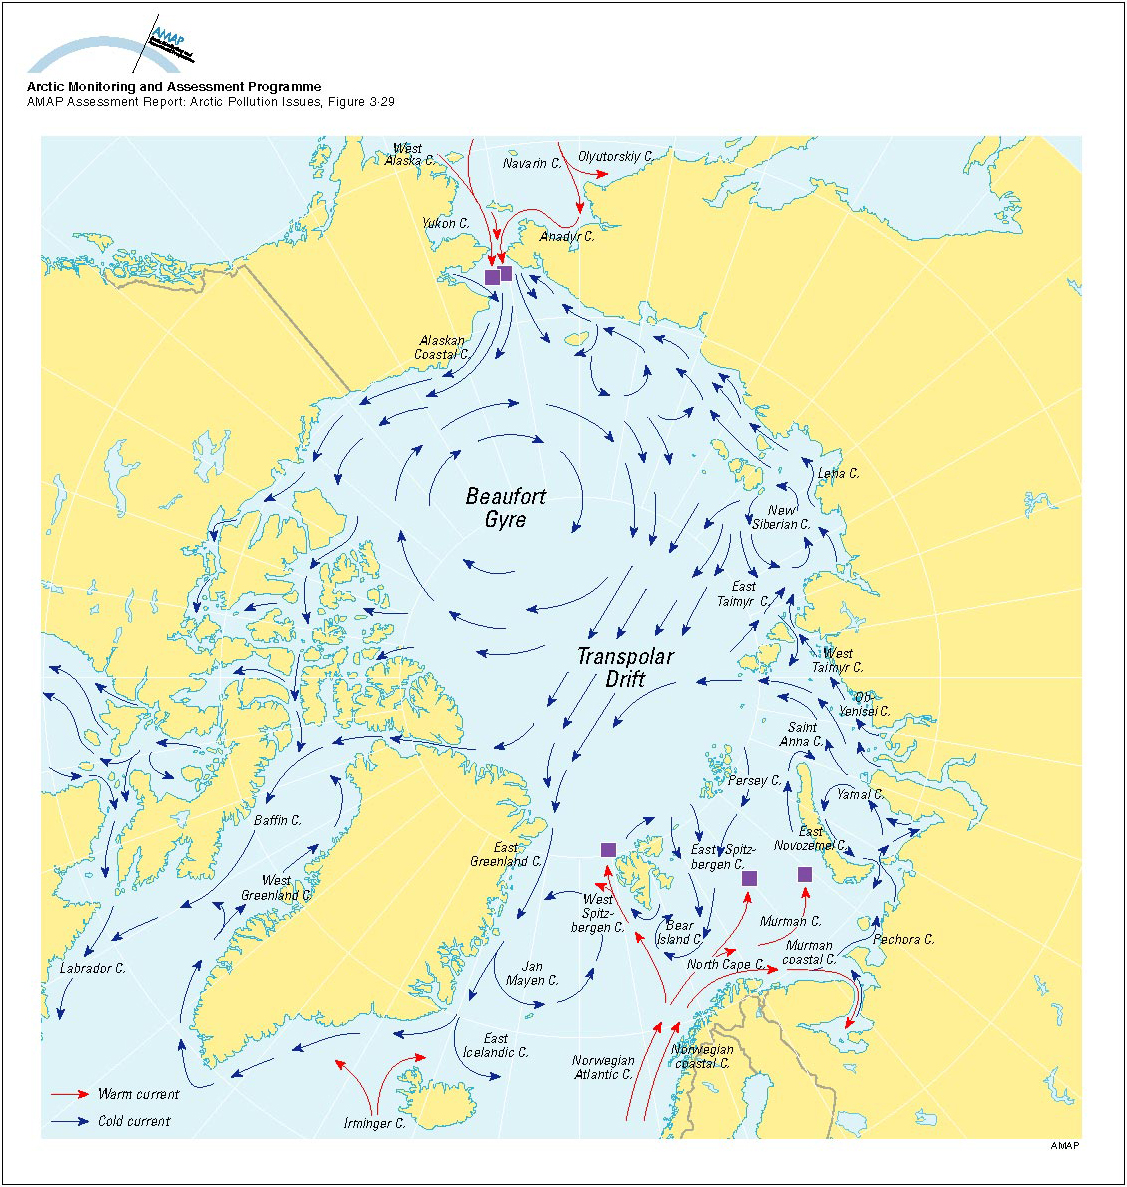 Холодное течение северо ледовитого океана. Течения Северного Ледовитого океана на карте. Карта морских течений Северного Ледовитого океана. Течения Северного Ледовитого океана теплые и холодные на карте. Течение морей Северного Ледовитого океана.